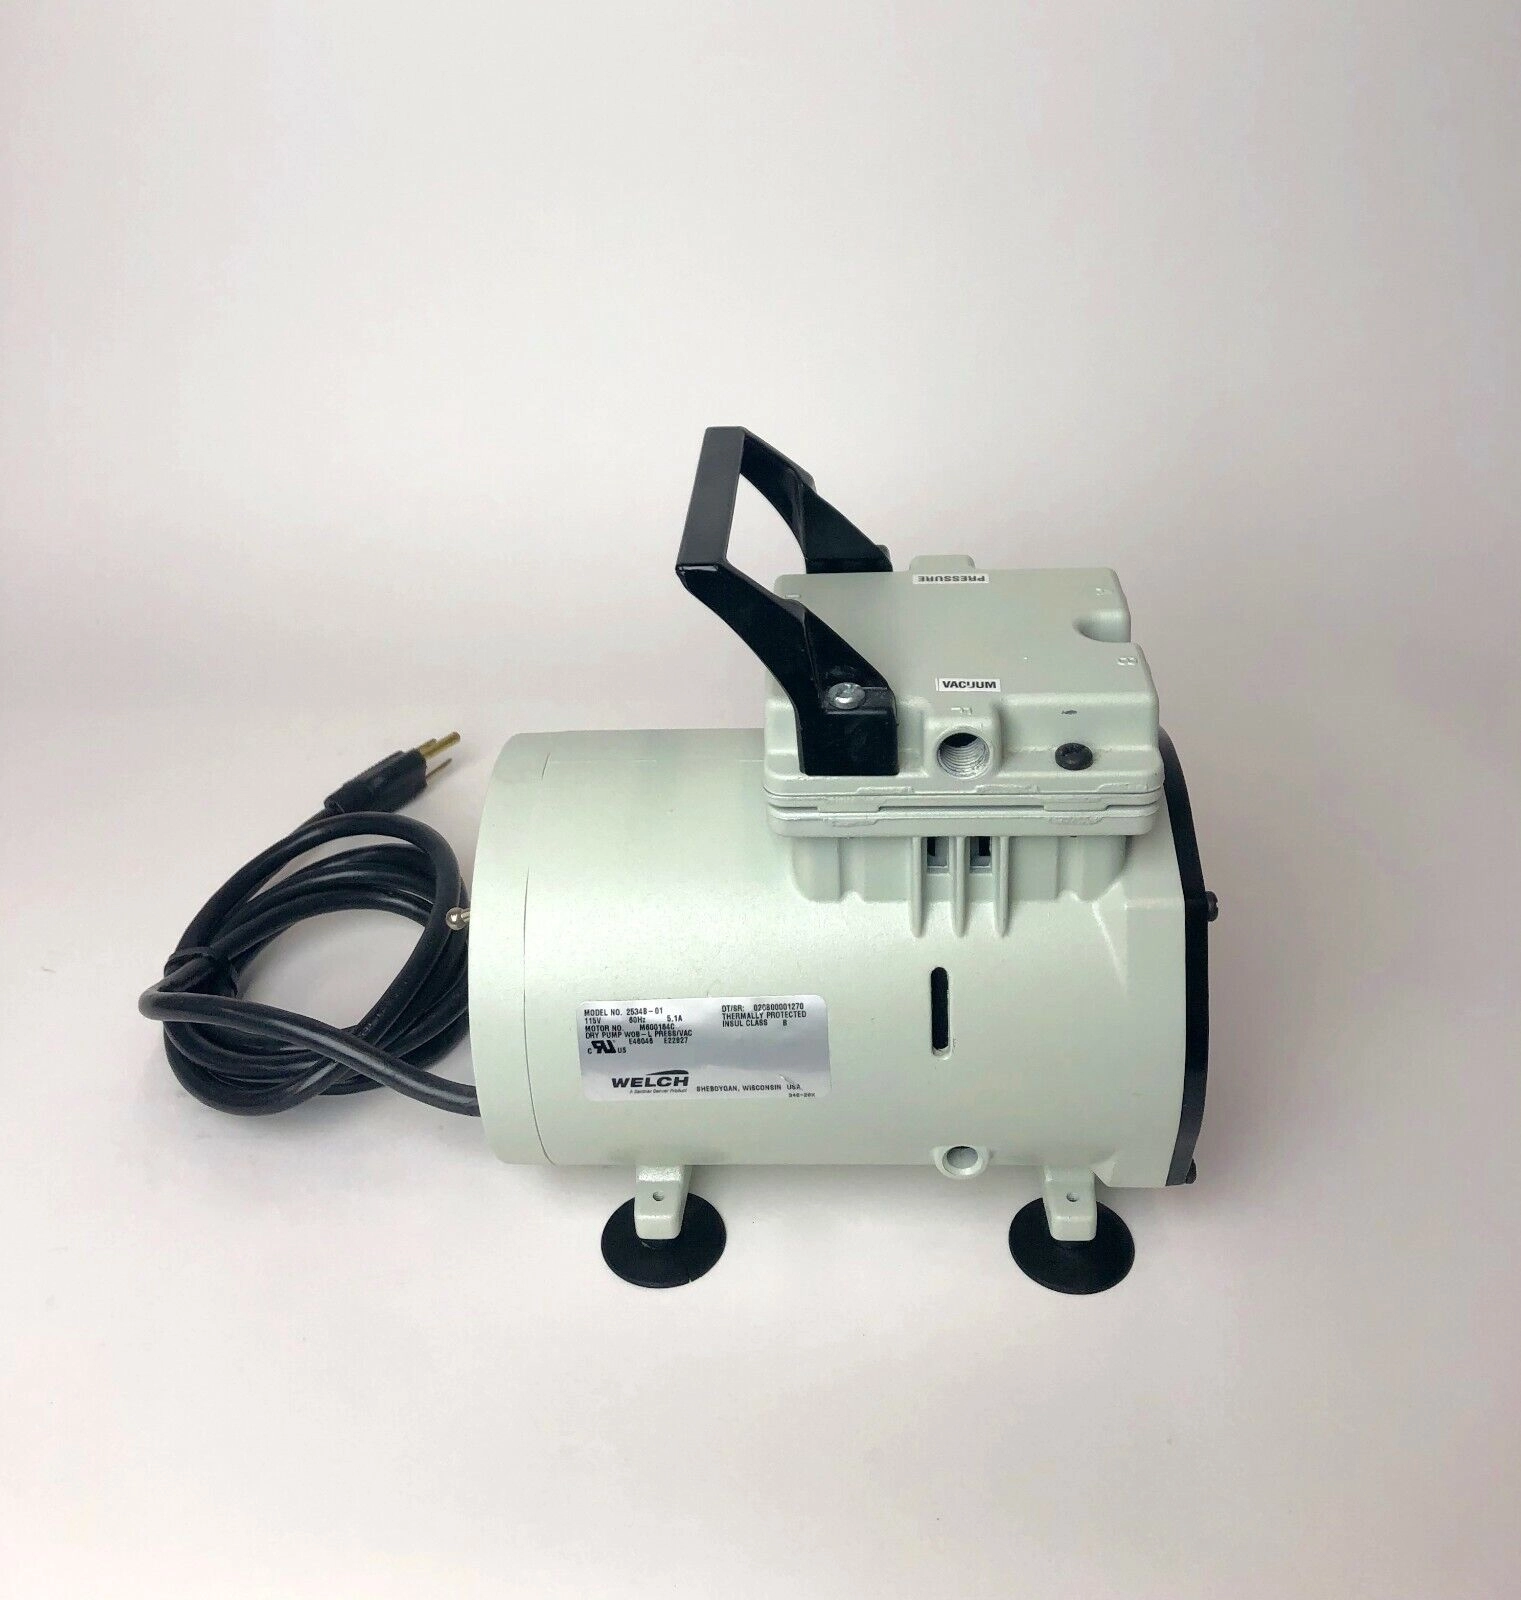 Welch Oil-Free Vacuum Pump  Model # 2534B-01